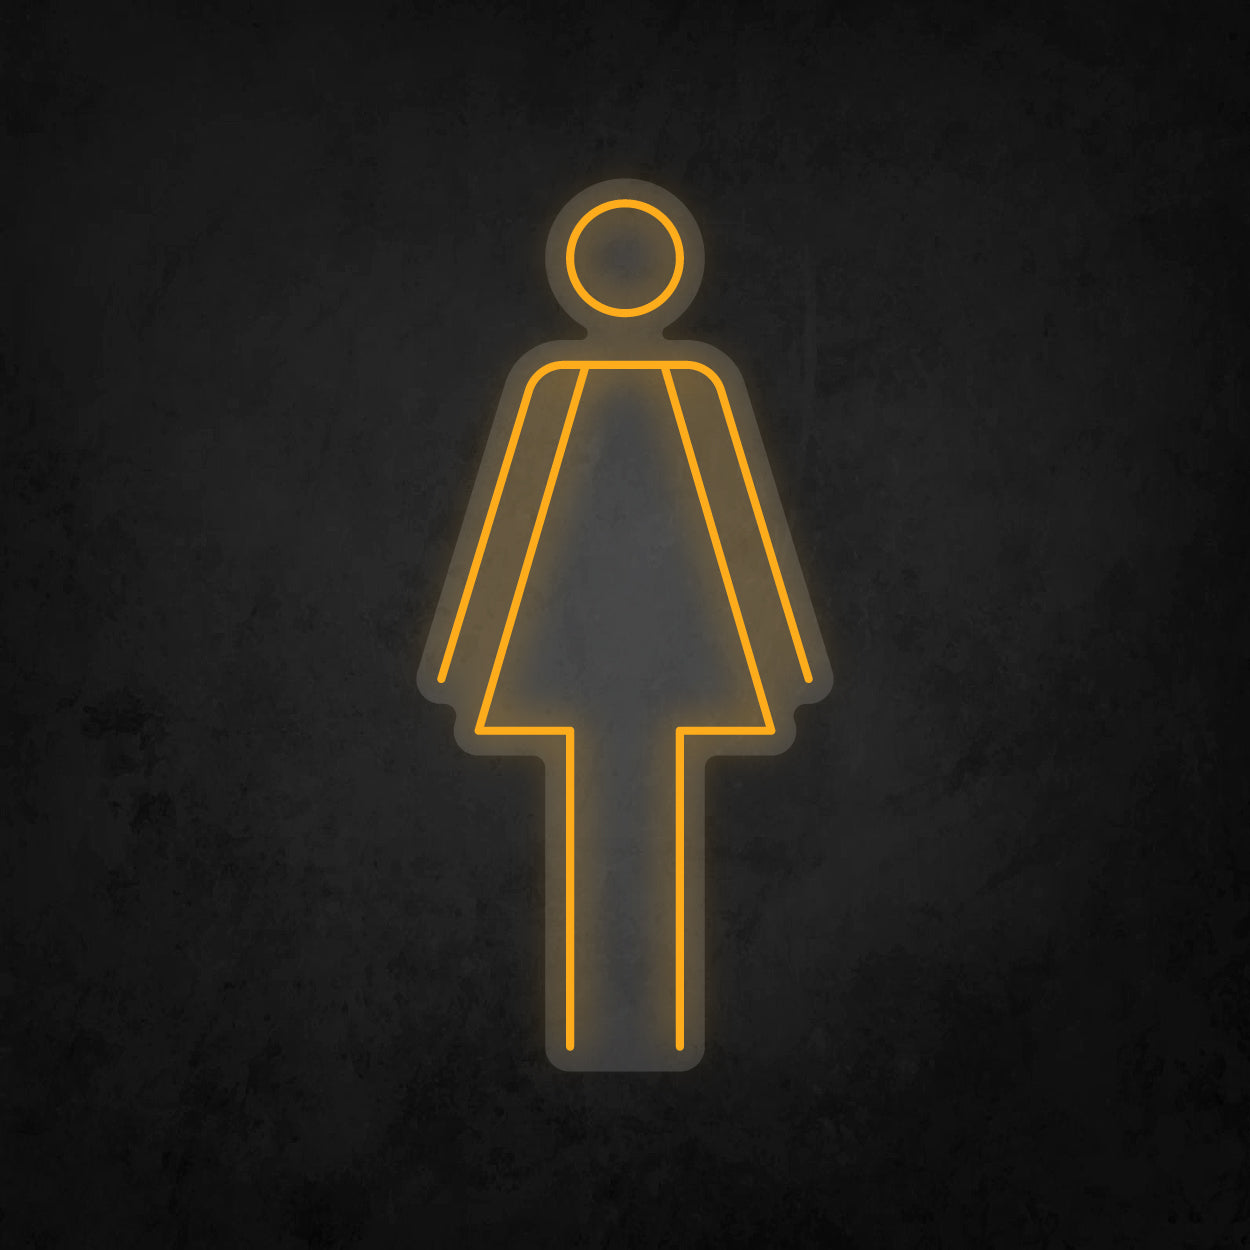 LED Neon Sign - Women's Restroom - Large